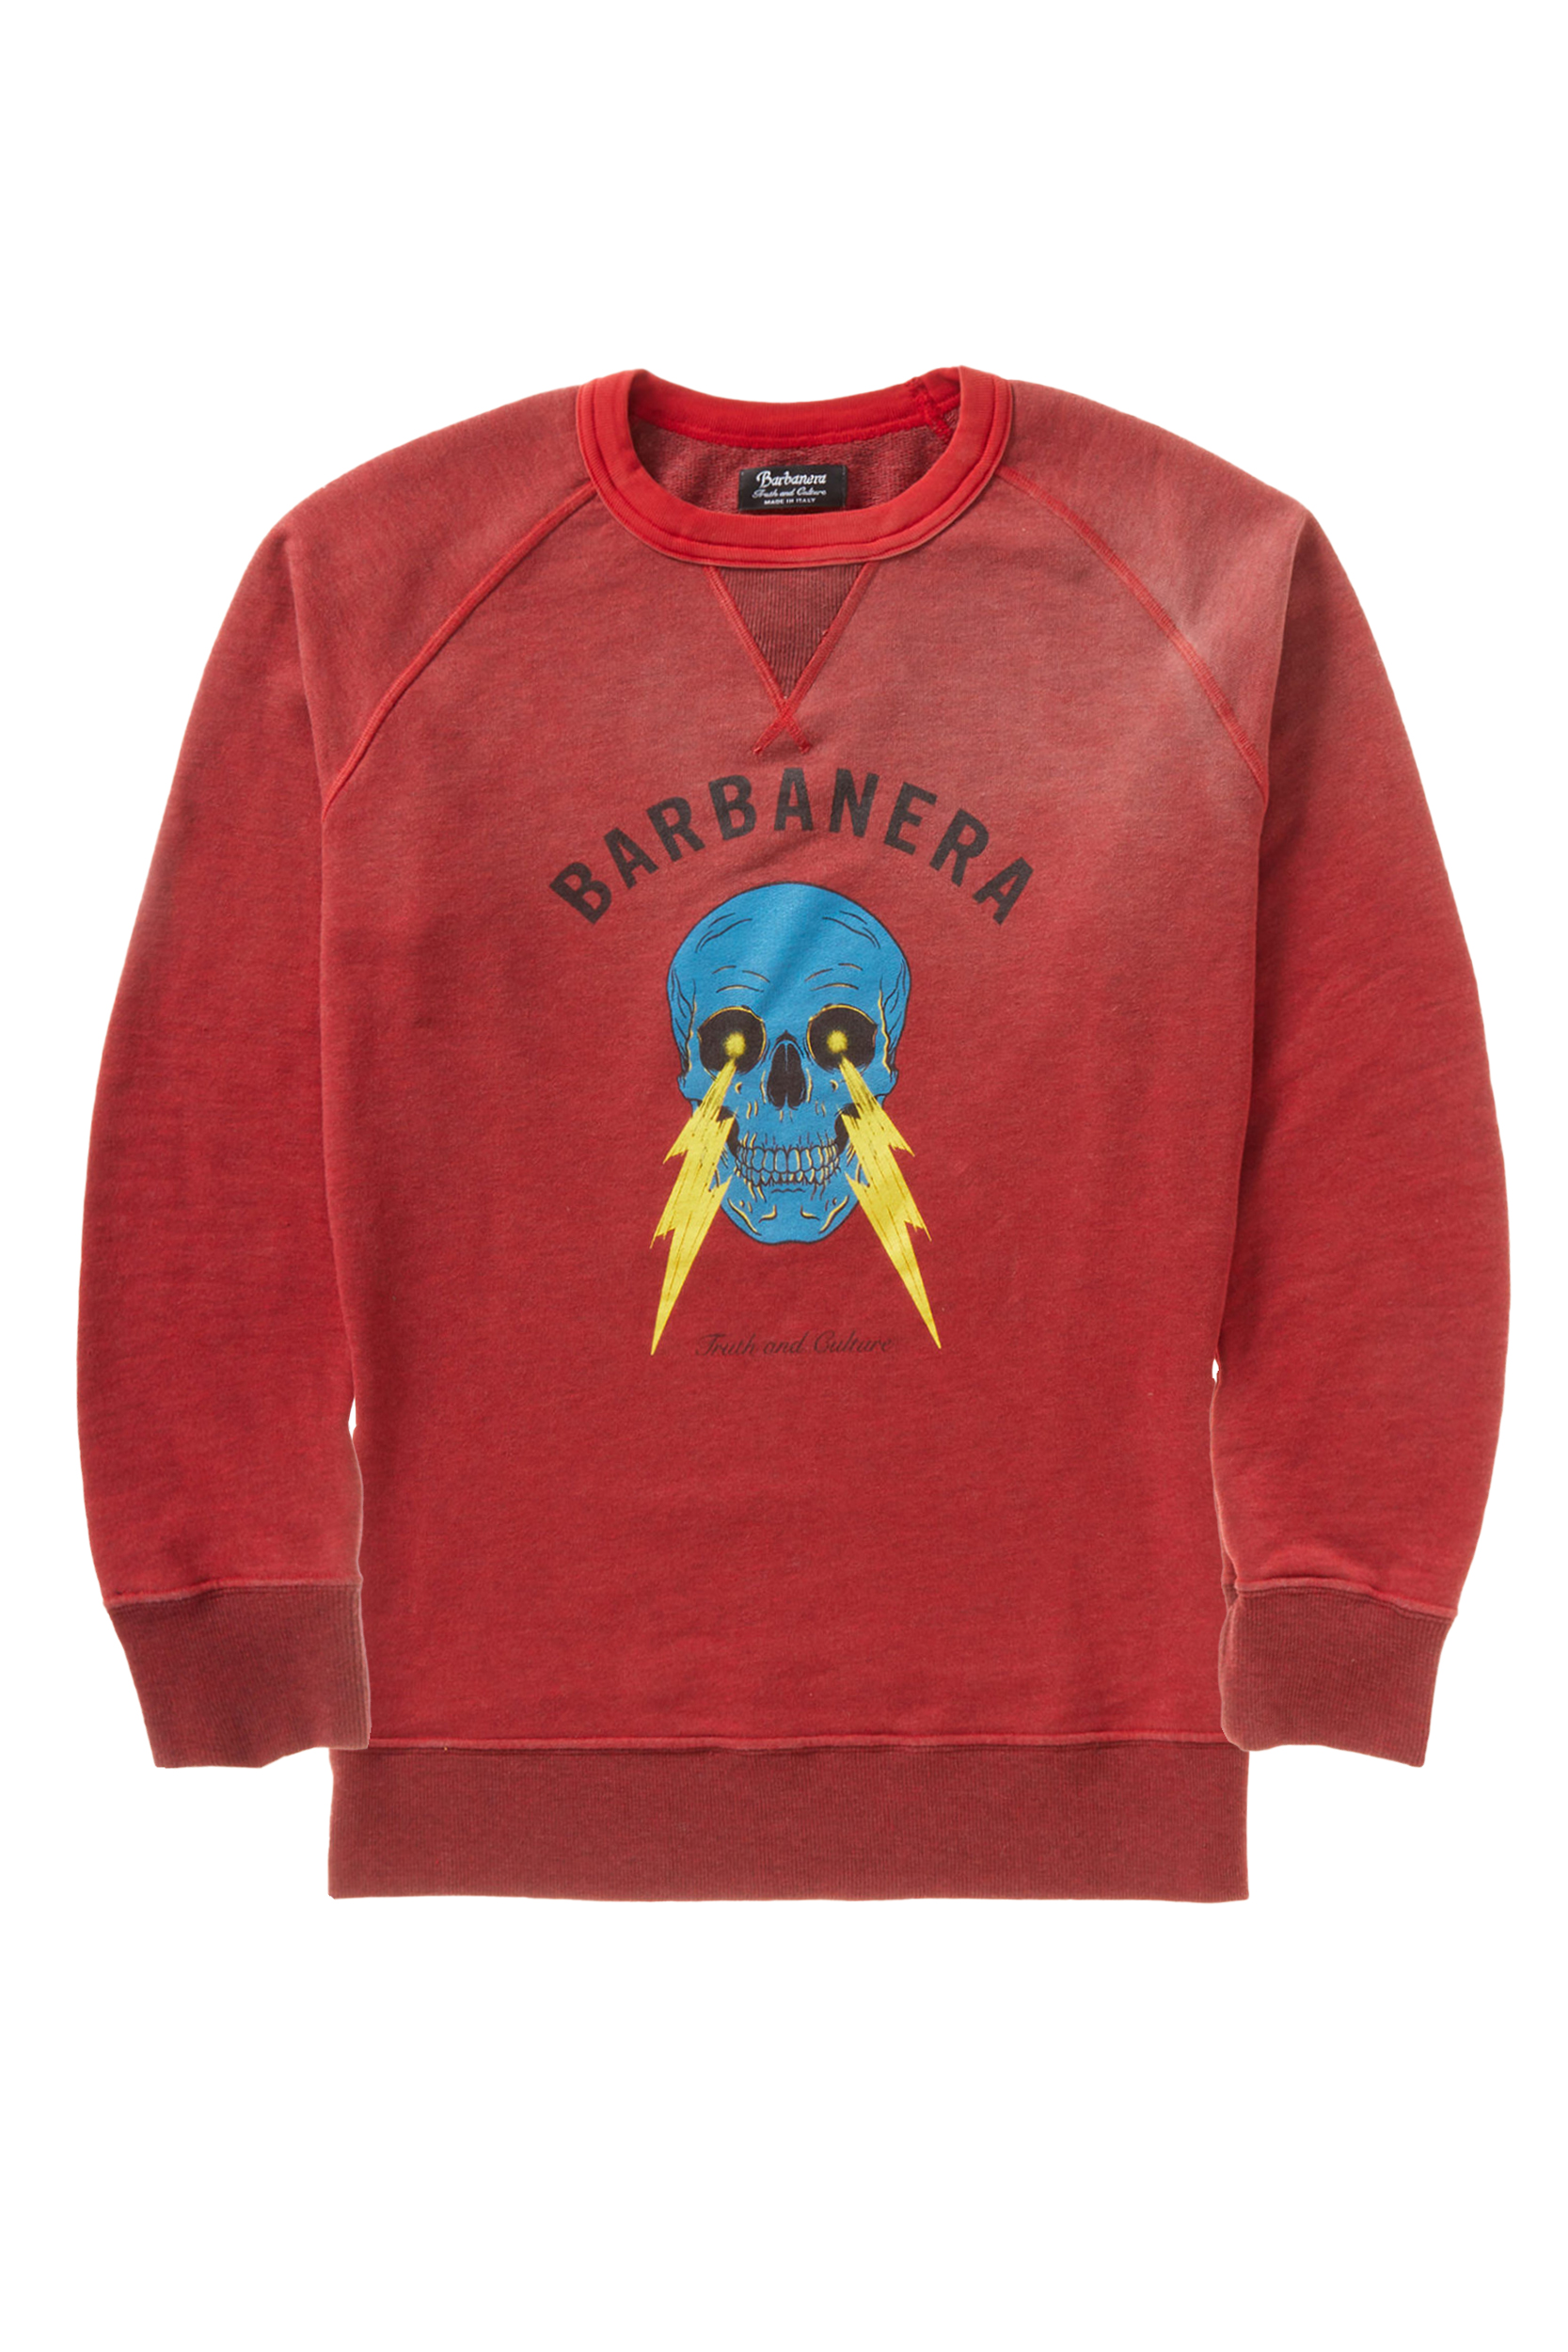 Meroni Vintage Red Sweatshirt - Bolt And Crew Skull Lightning Barbanera Cotton Neck Graphic